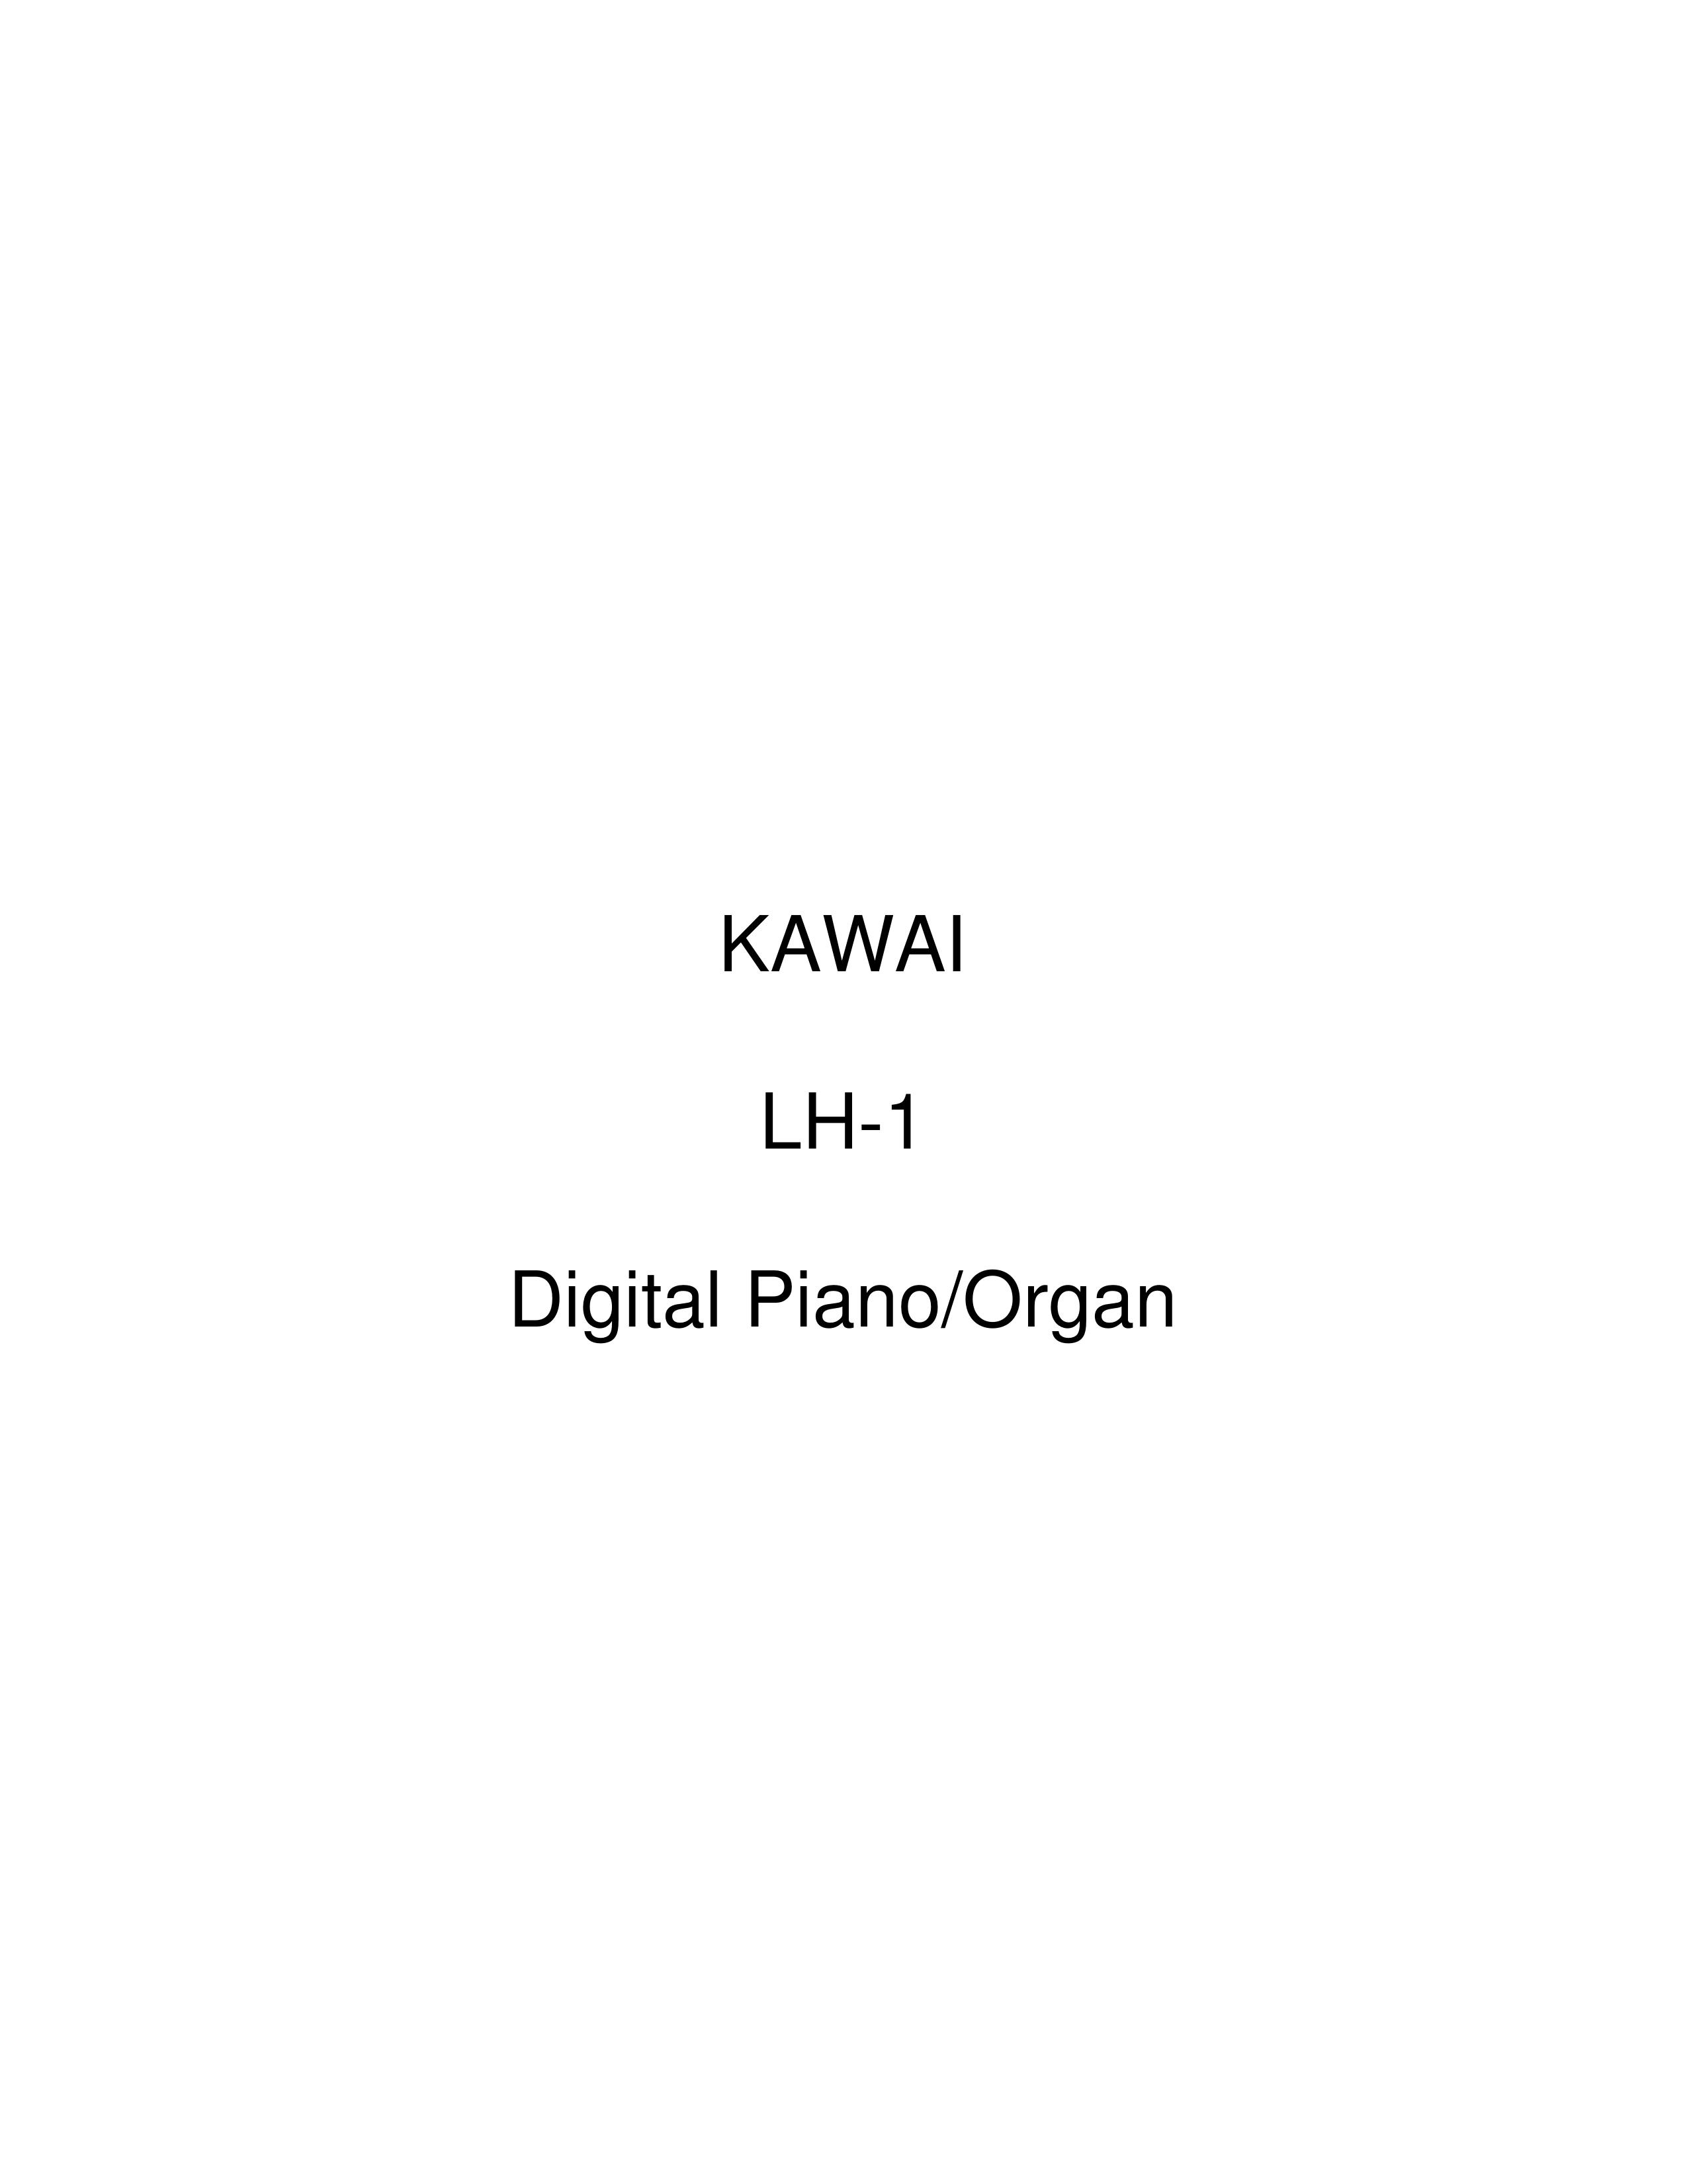 Kawai LH-1 Electronic Keyboard User Manual